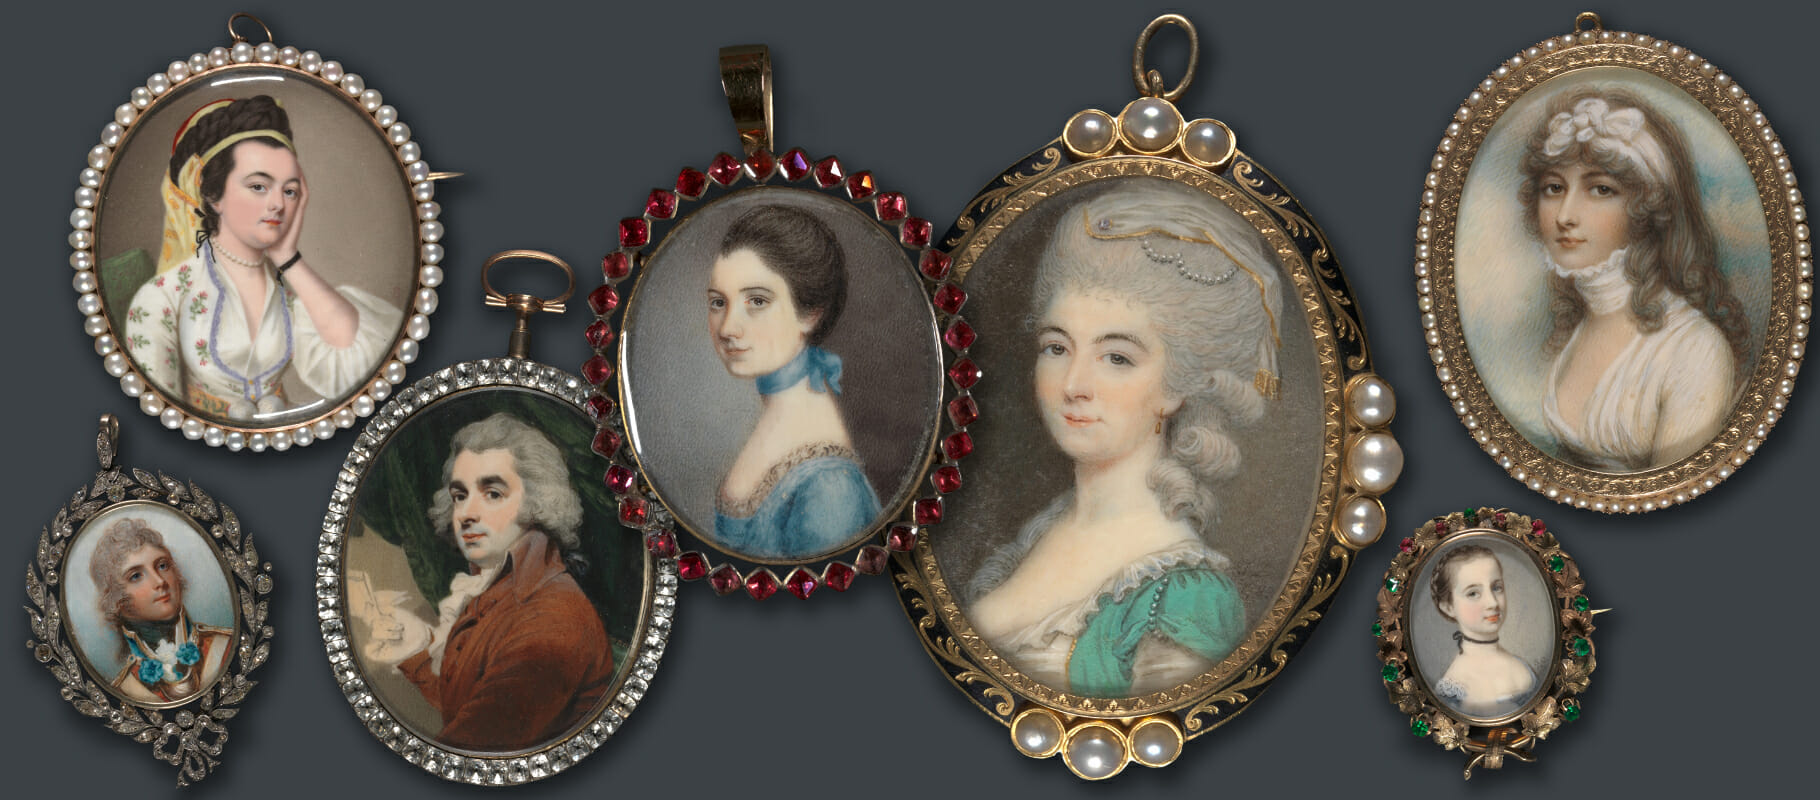 A brief introduction to portrait miniatures